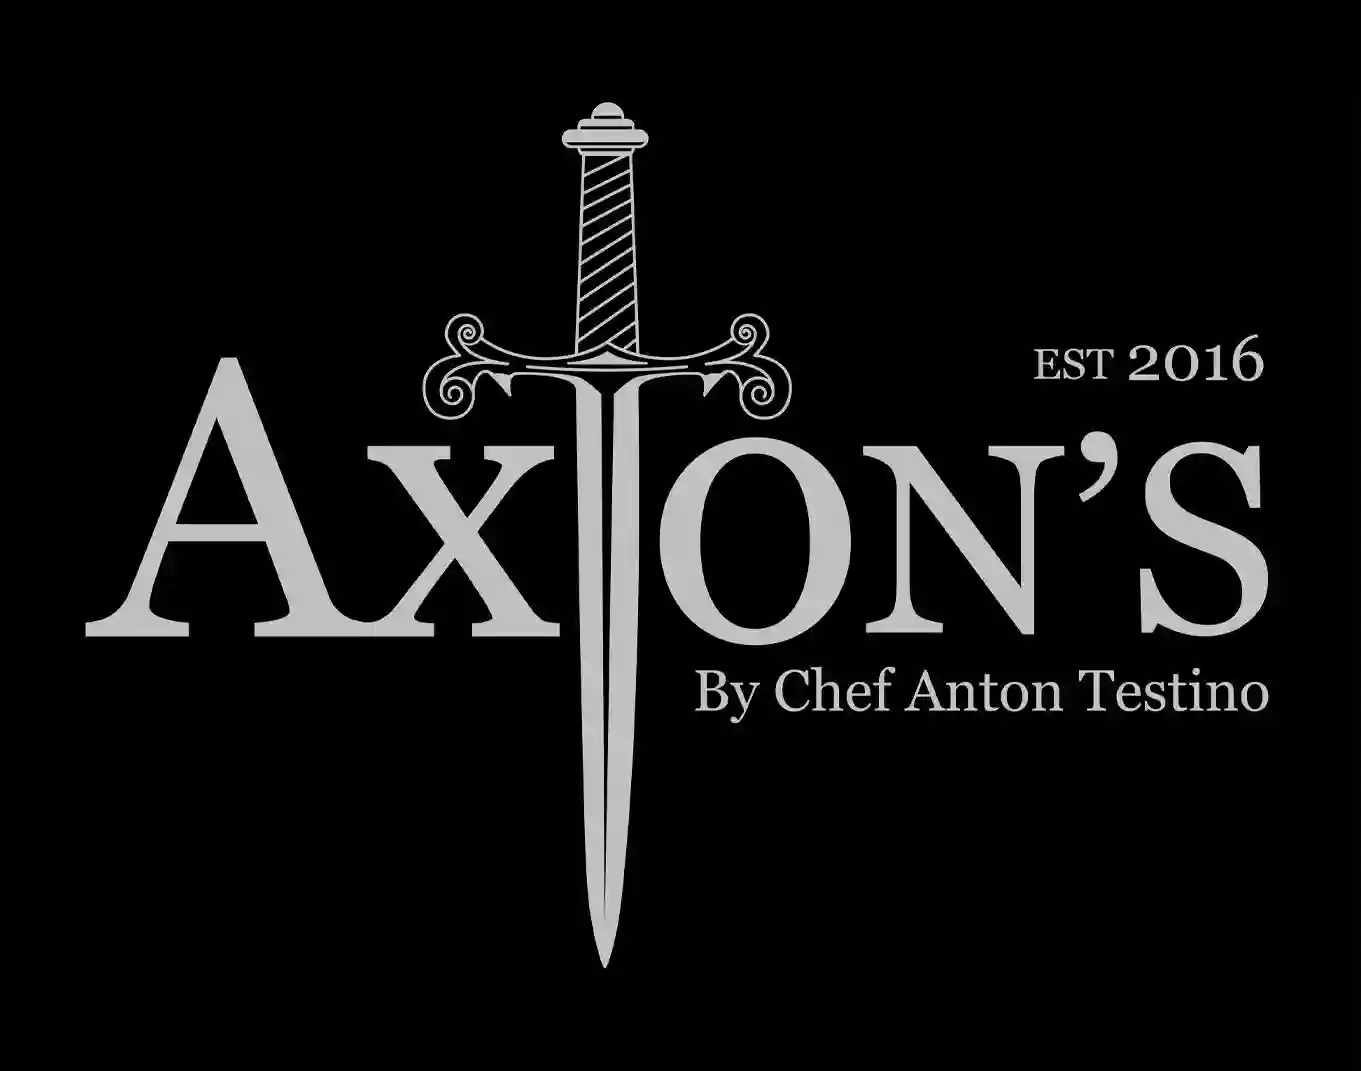 Axton's by Chef Anton Testino